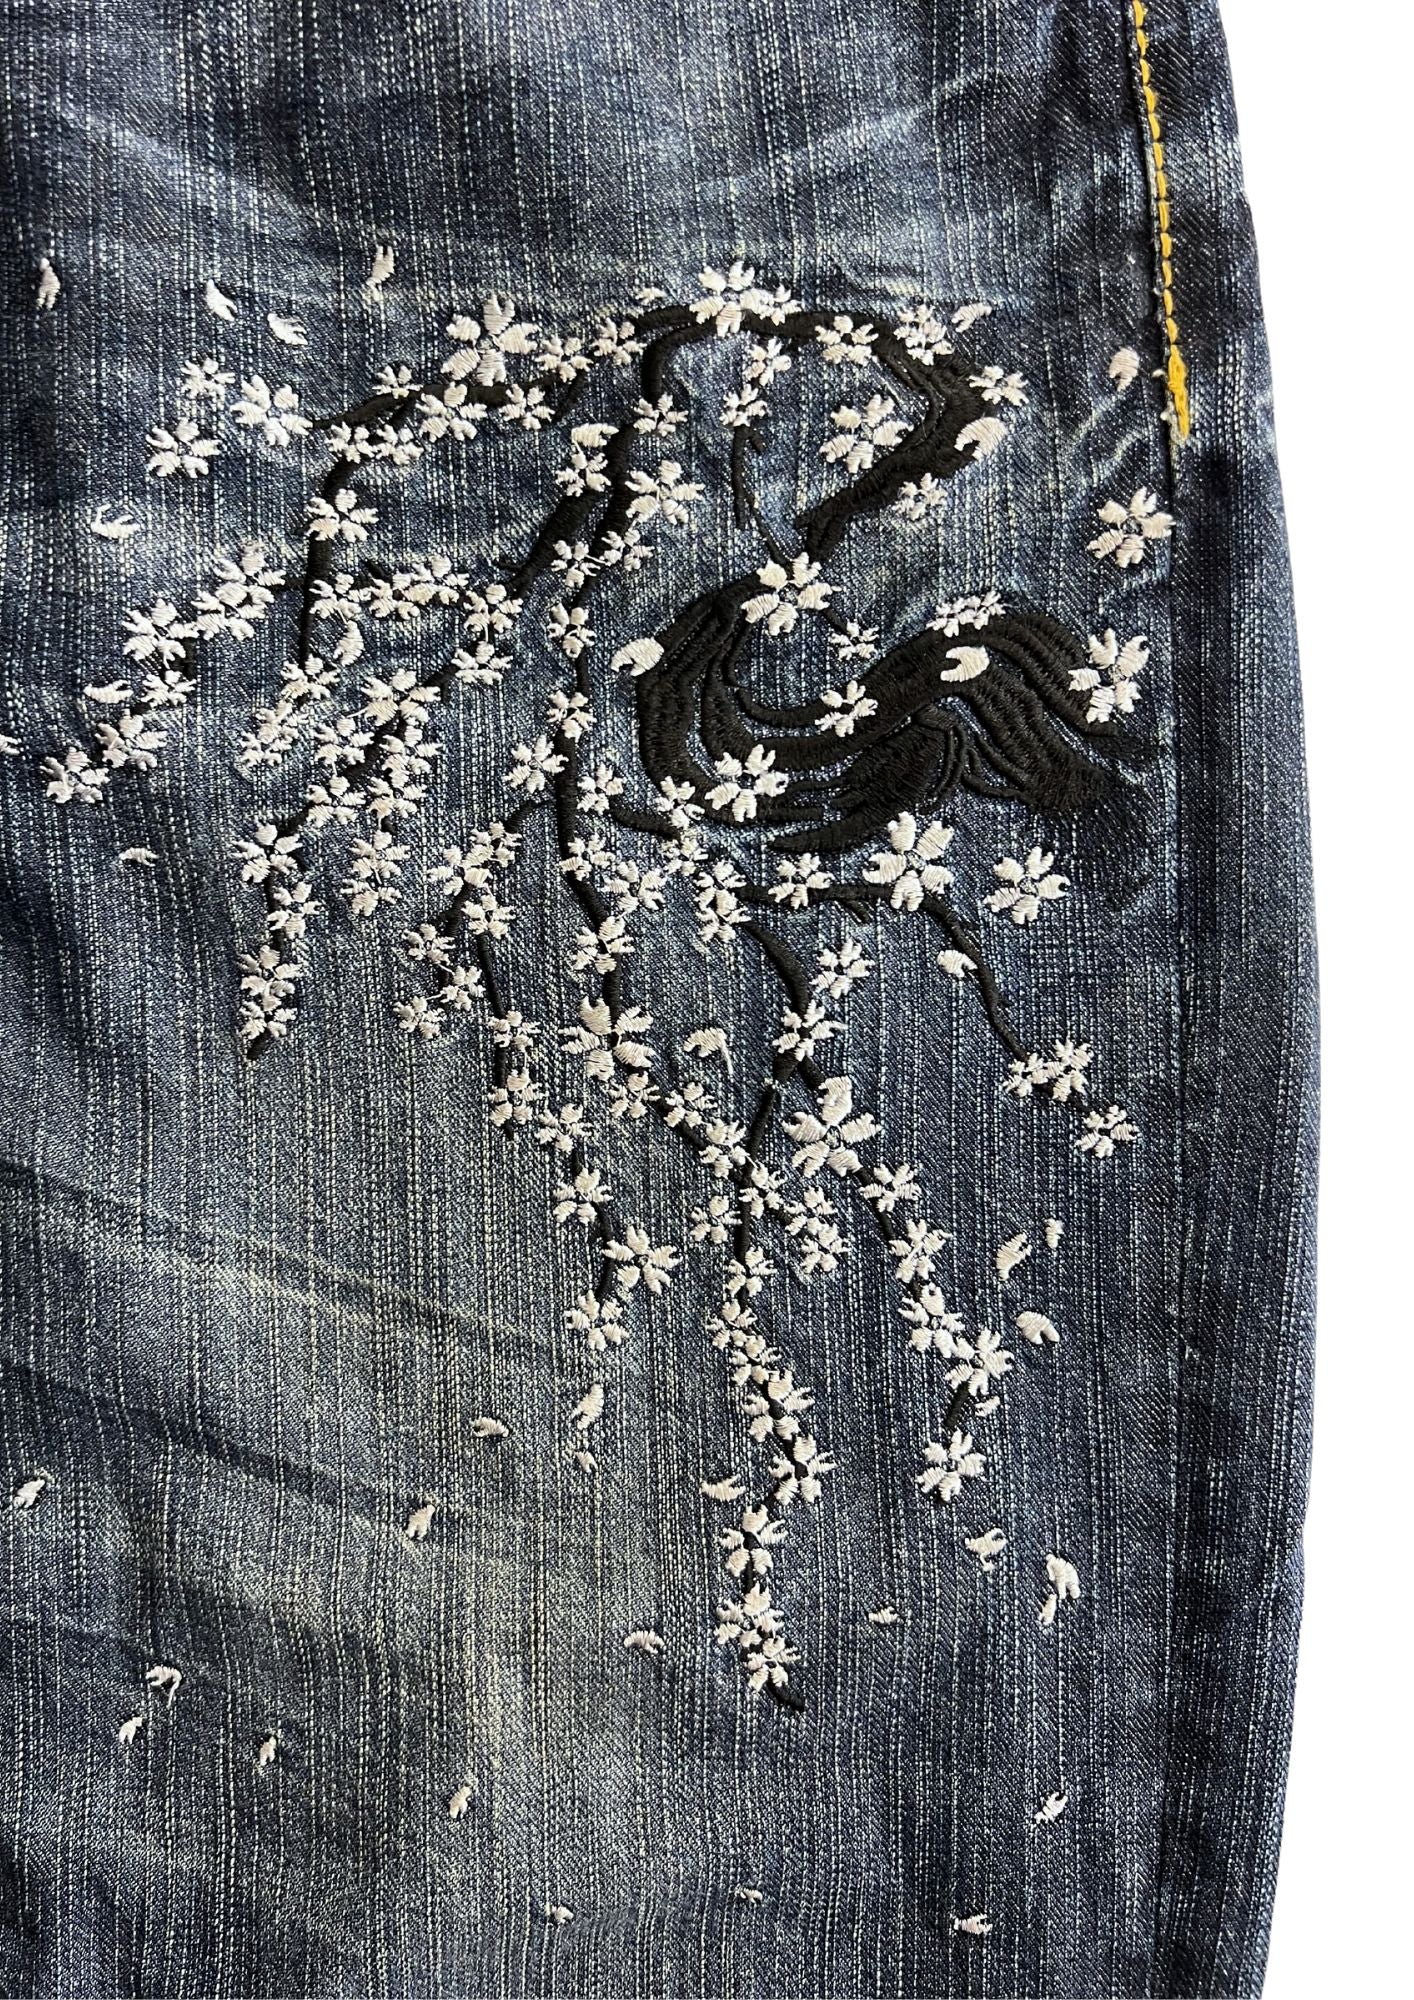 Vintage Nishiki Japanese Cherry Blossom Embroidered Denim Jeans